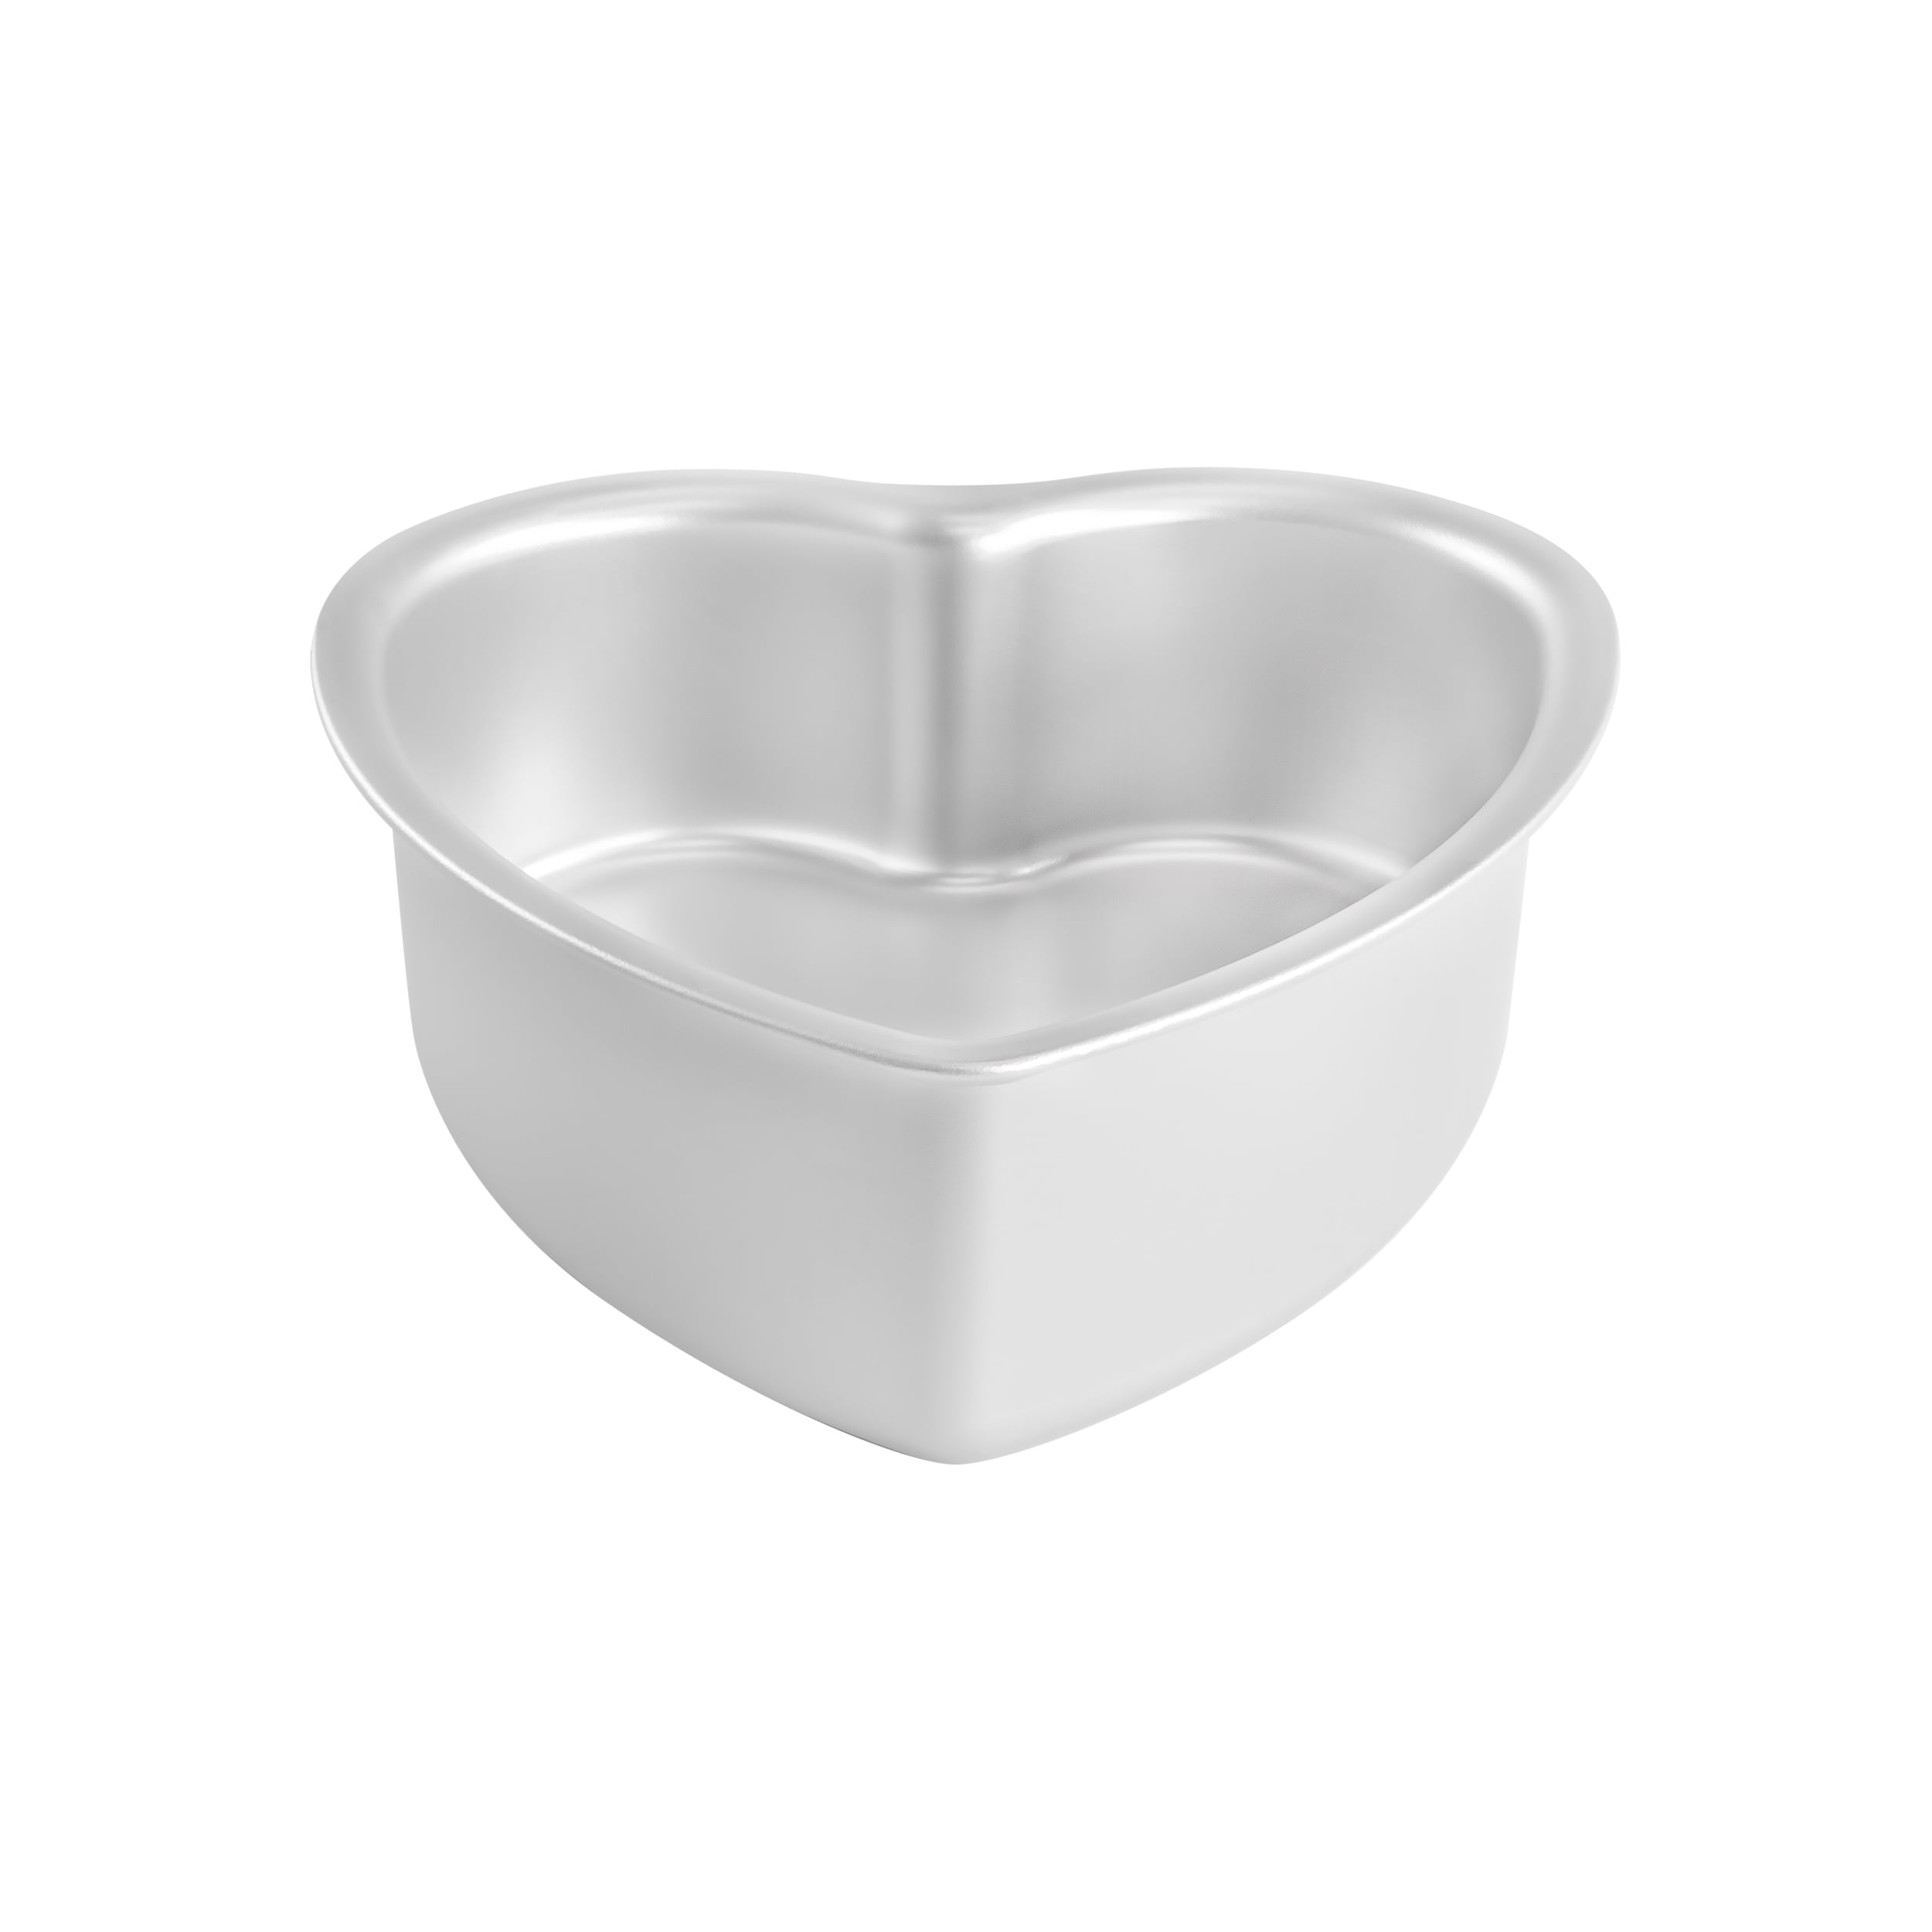 ObiozZ 8 inch heart-shaped cake pan set of 2, heart-shaped cake